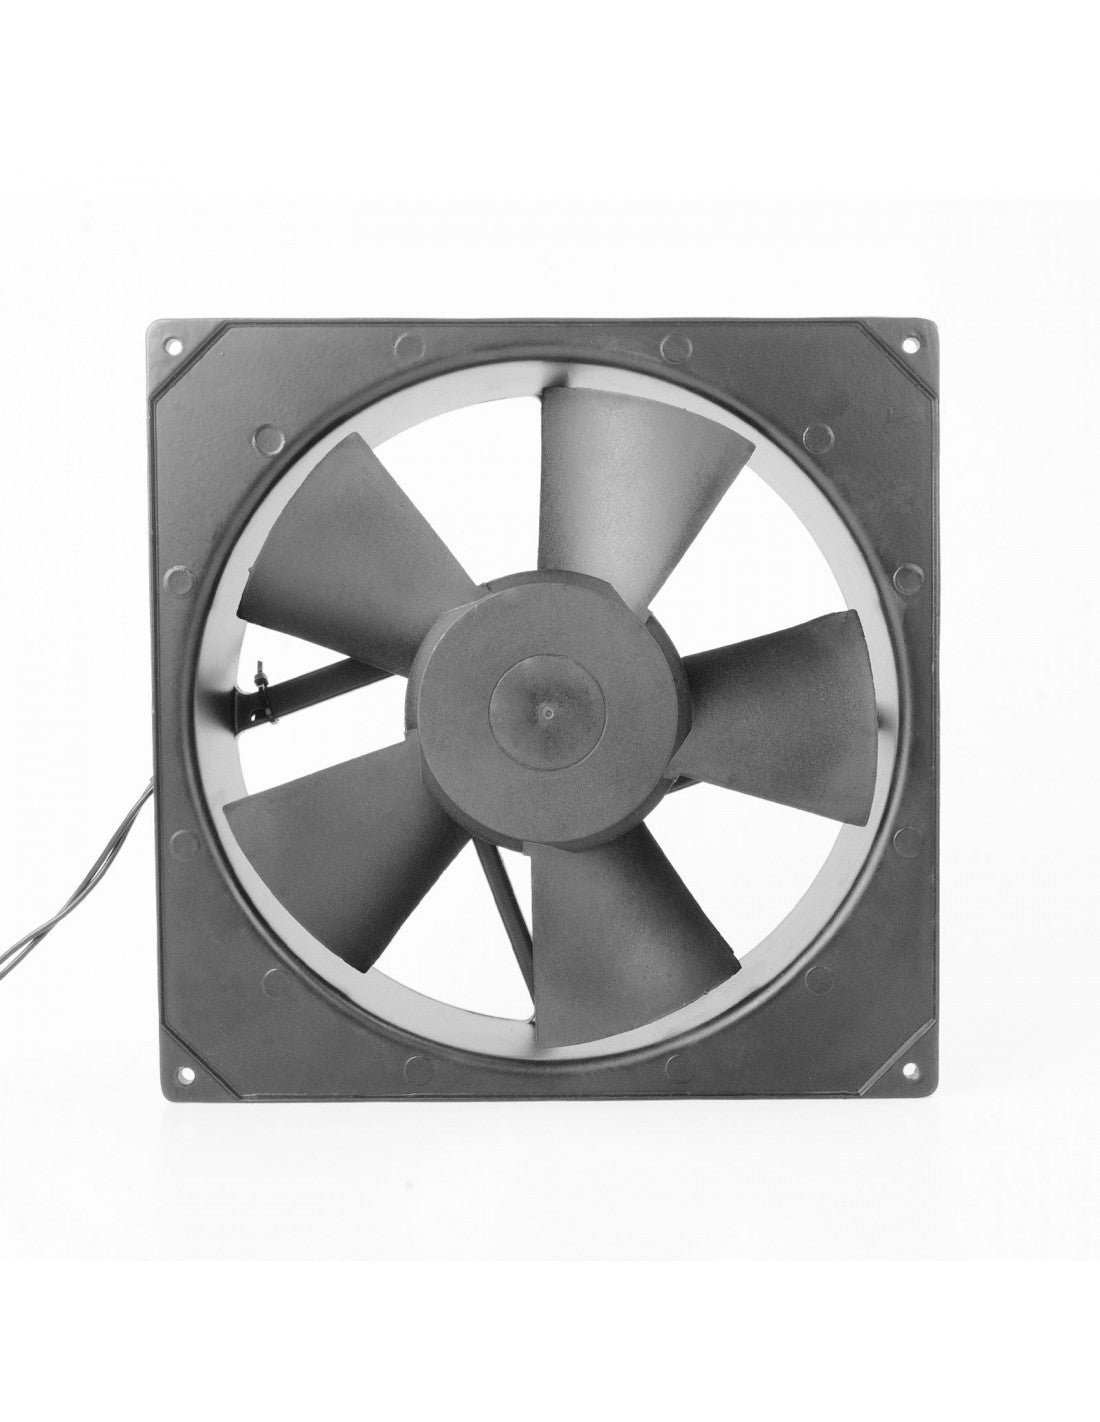 Ventilator de racire la 220V patrat-rotund 200x200x60mm